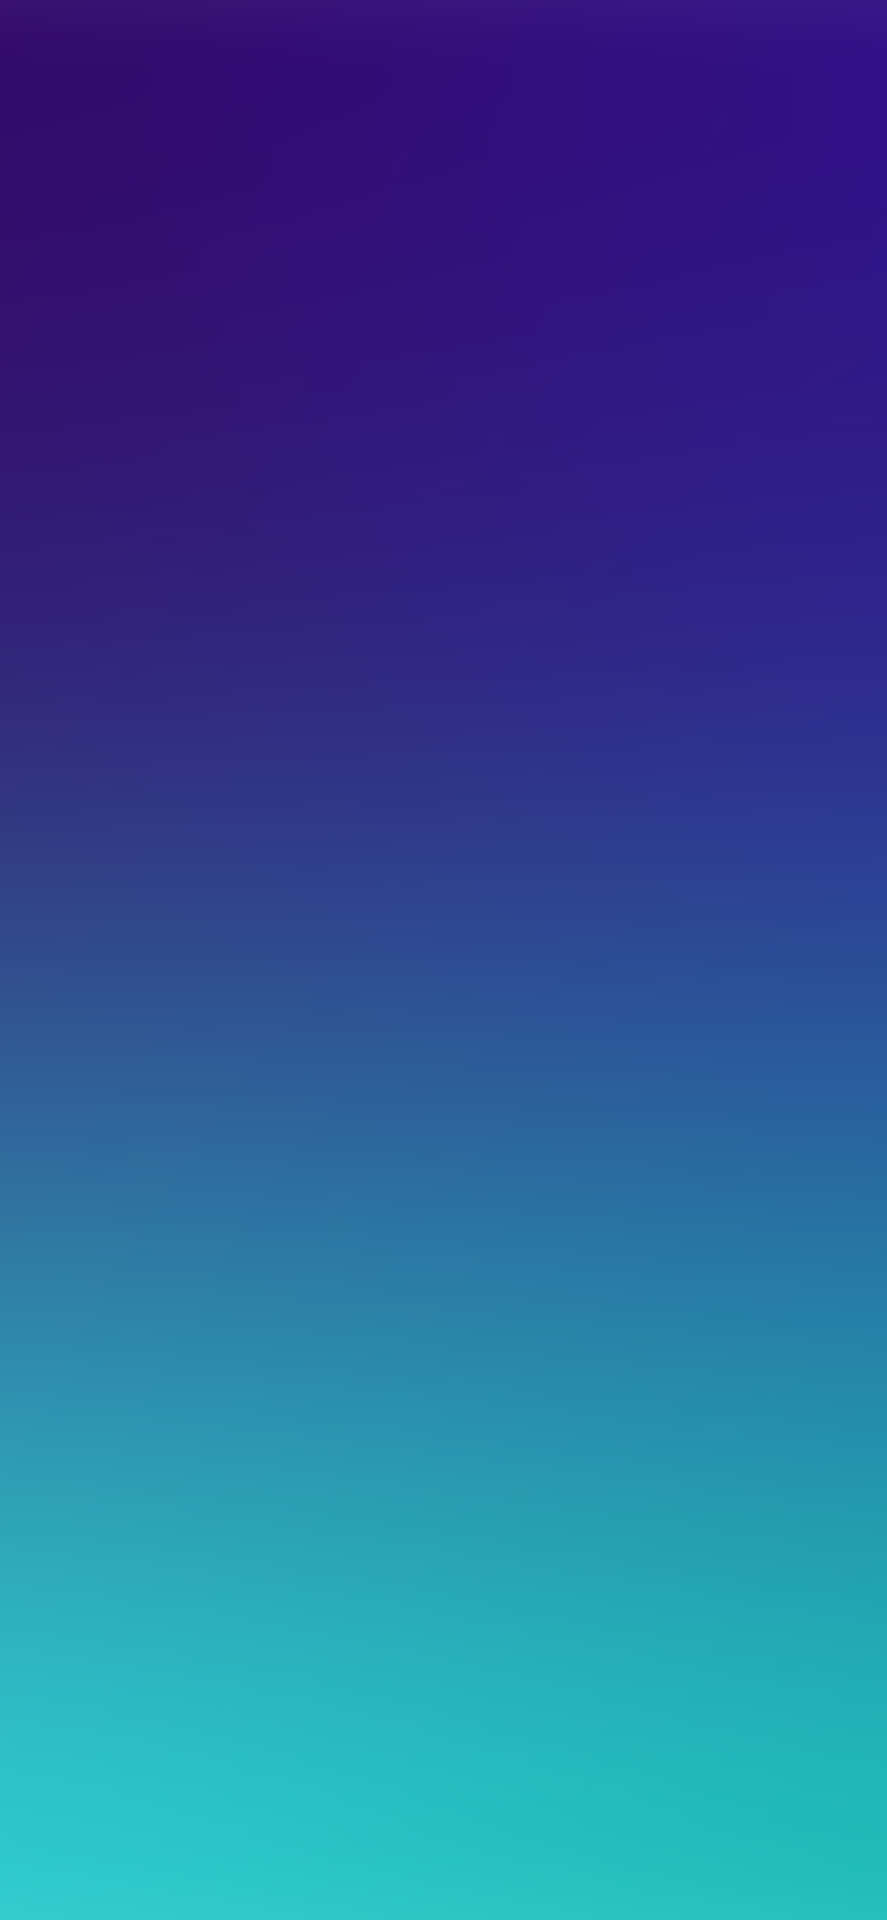 En blå og lilla gradient baggrund Wallpaper